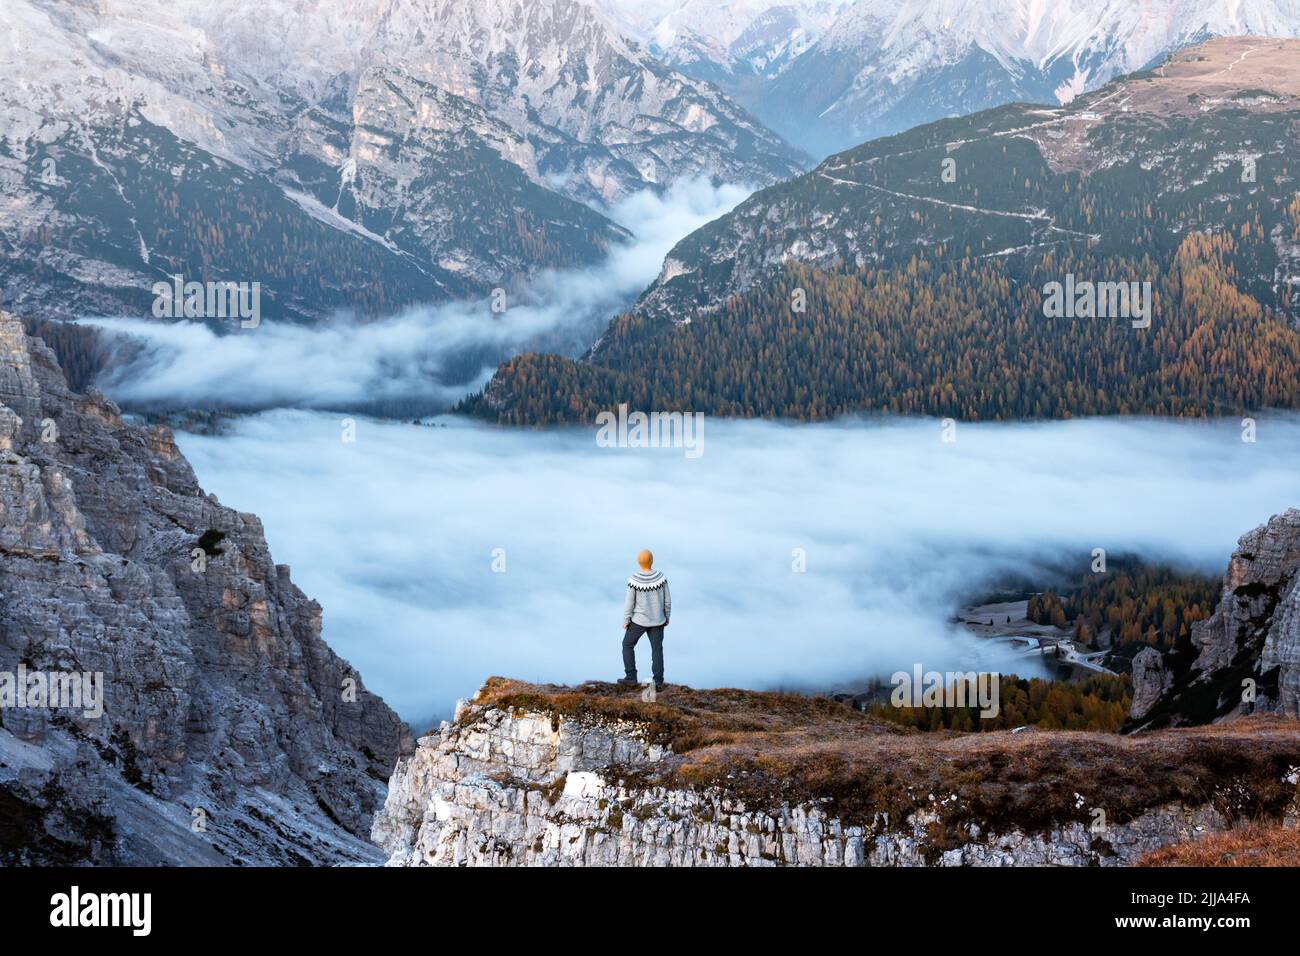 A tourist stands over the fog at the edge of a cliff in the Dolomites mountains. Location Auronzo rifugio in Tre Cime di Lavaredo National Park, Dolomites, Trentino Alto Adige, Italy Stock Photo